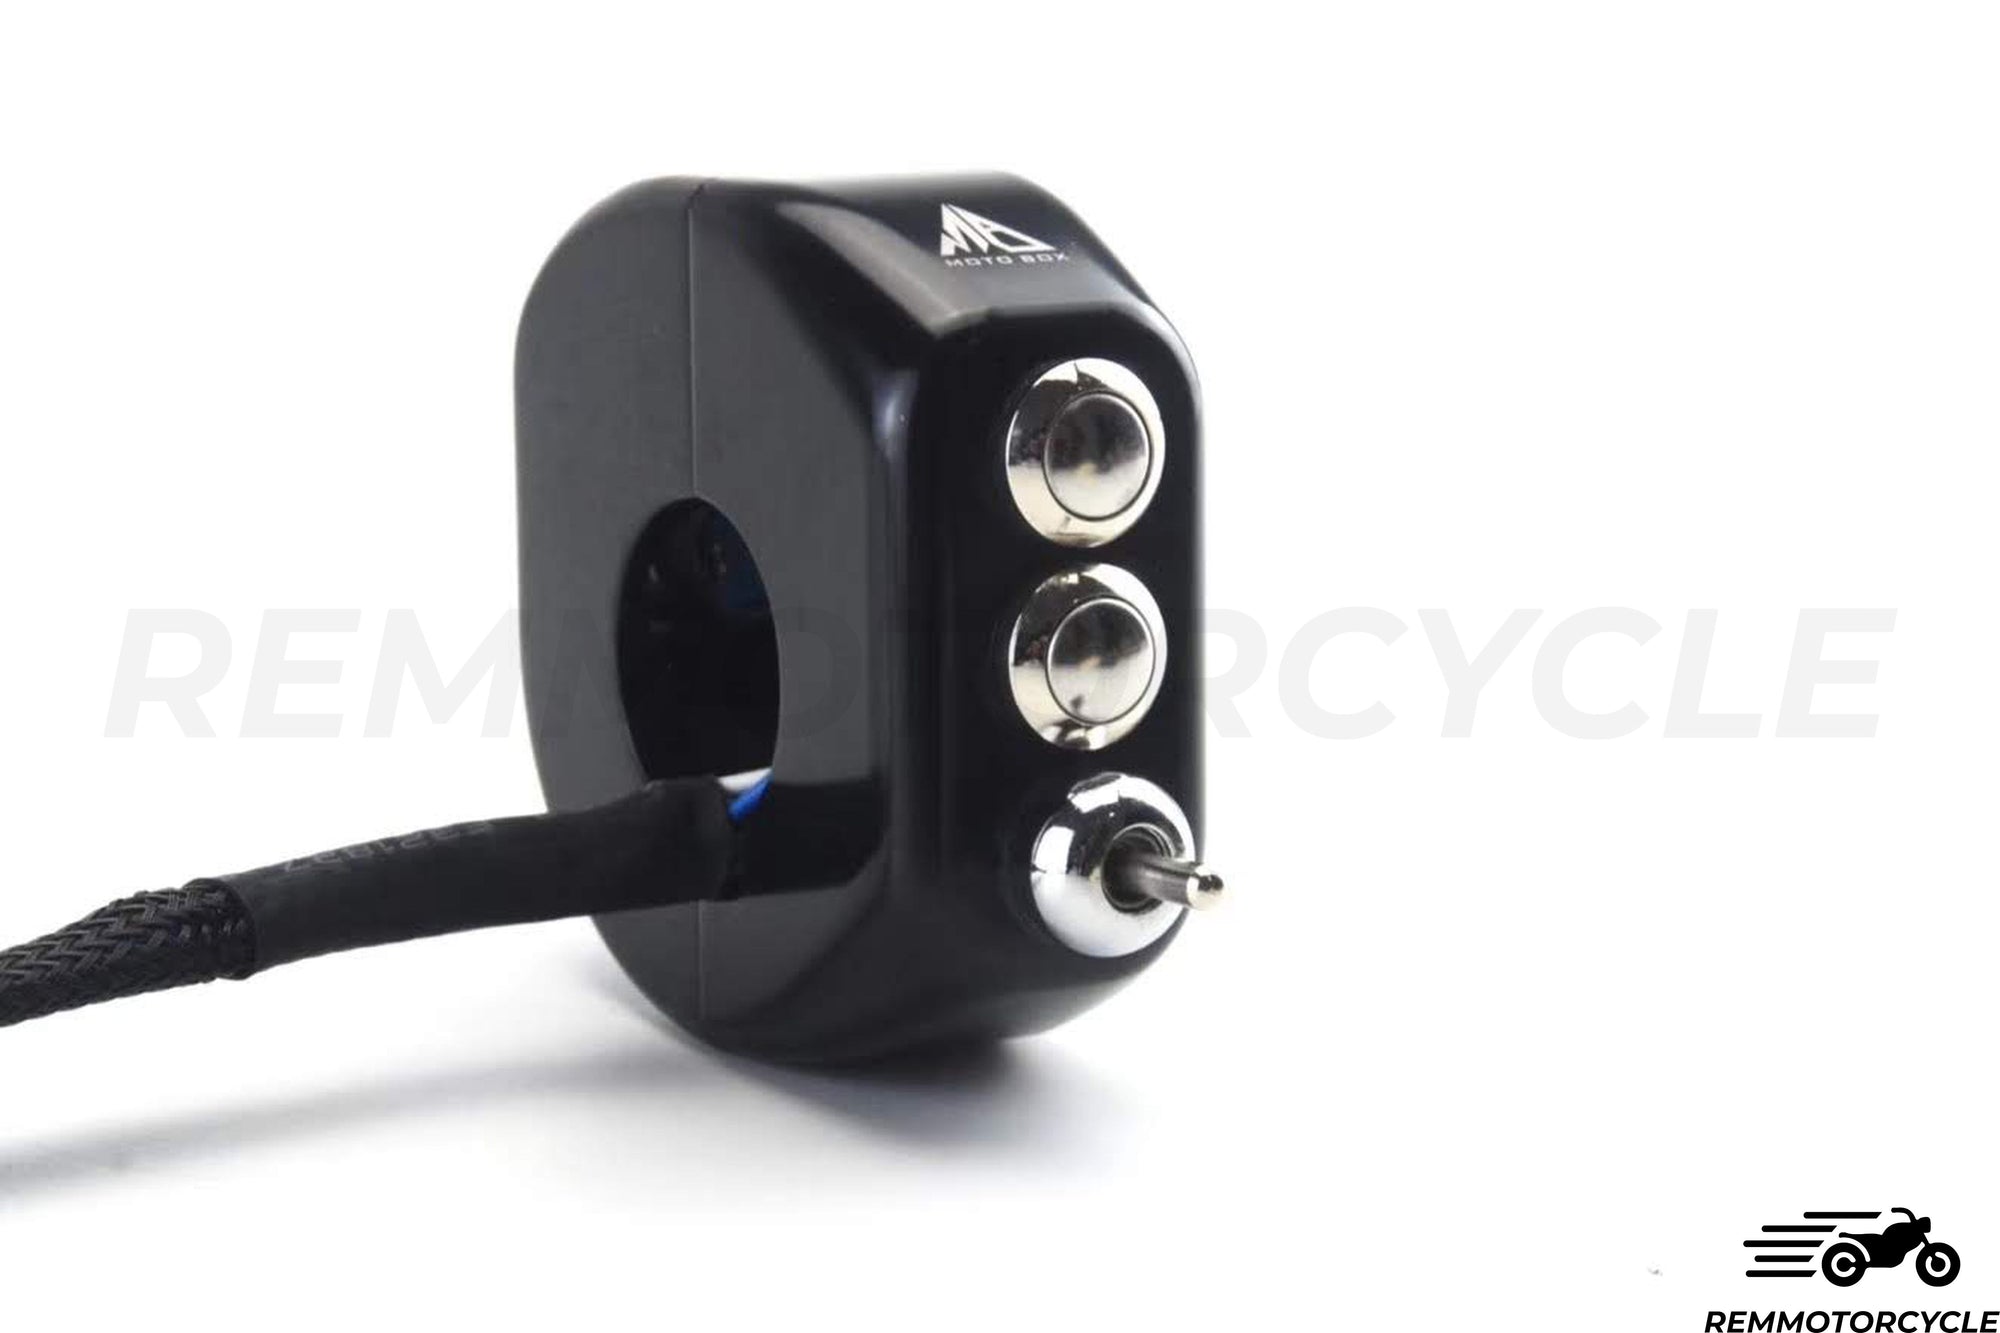 Commodo Moto CNC 3 buttons + black or silver indicators